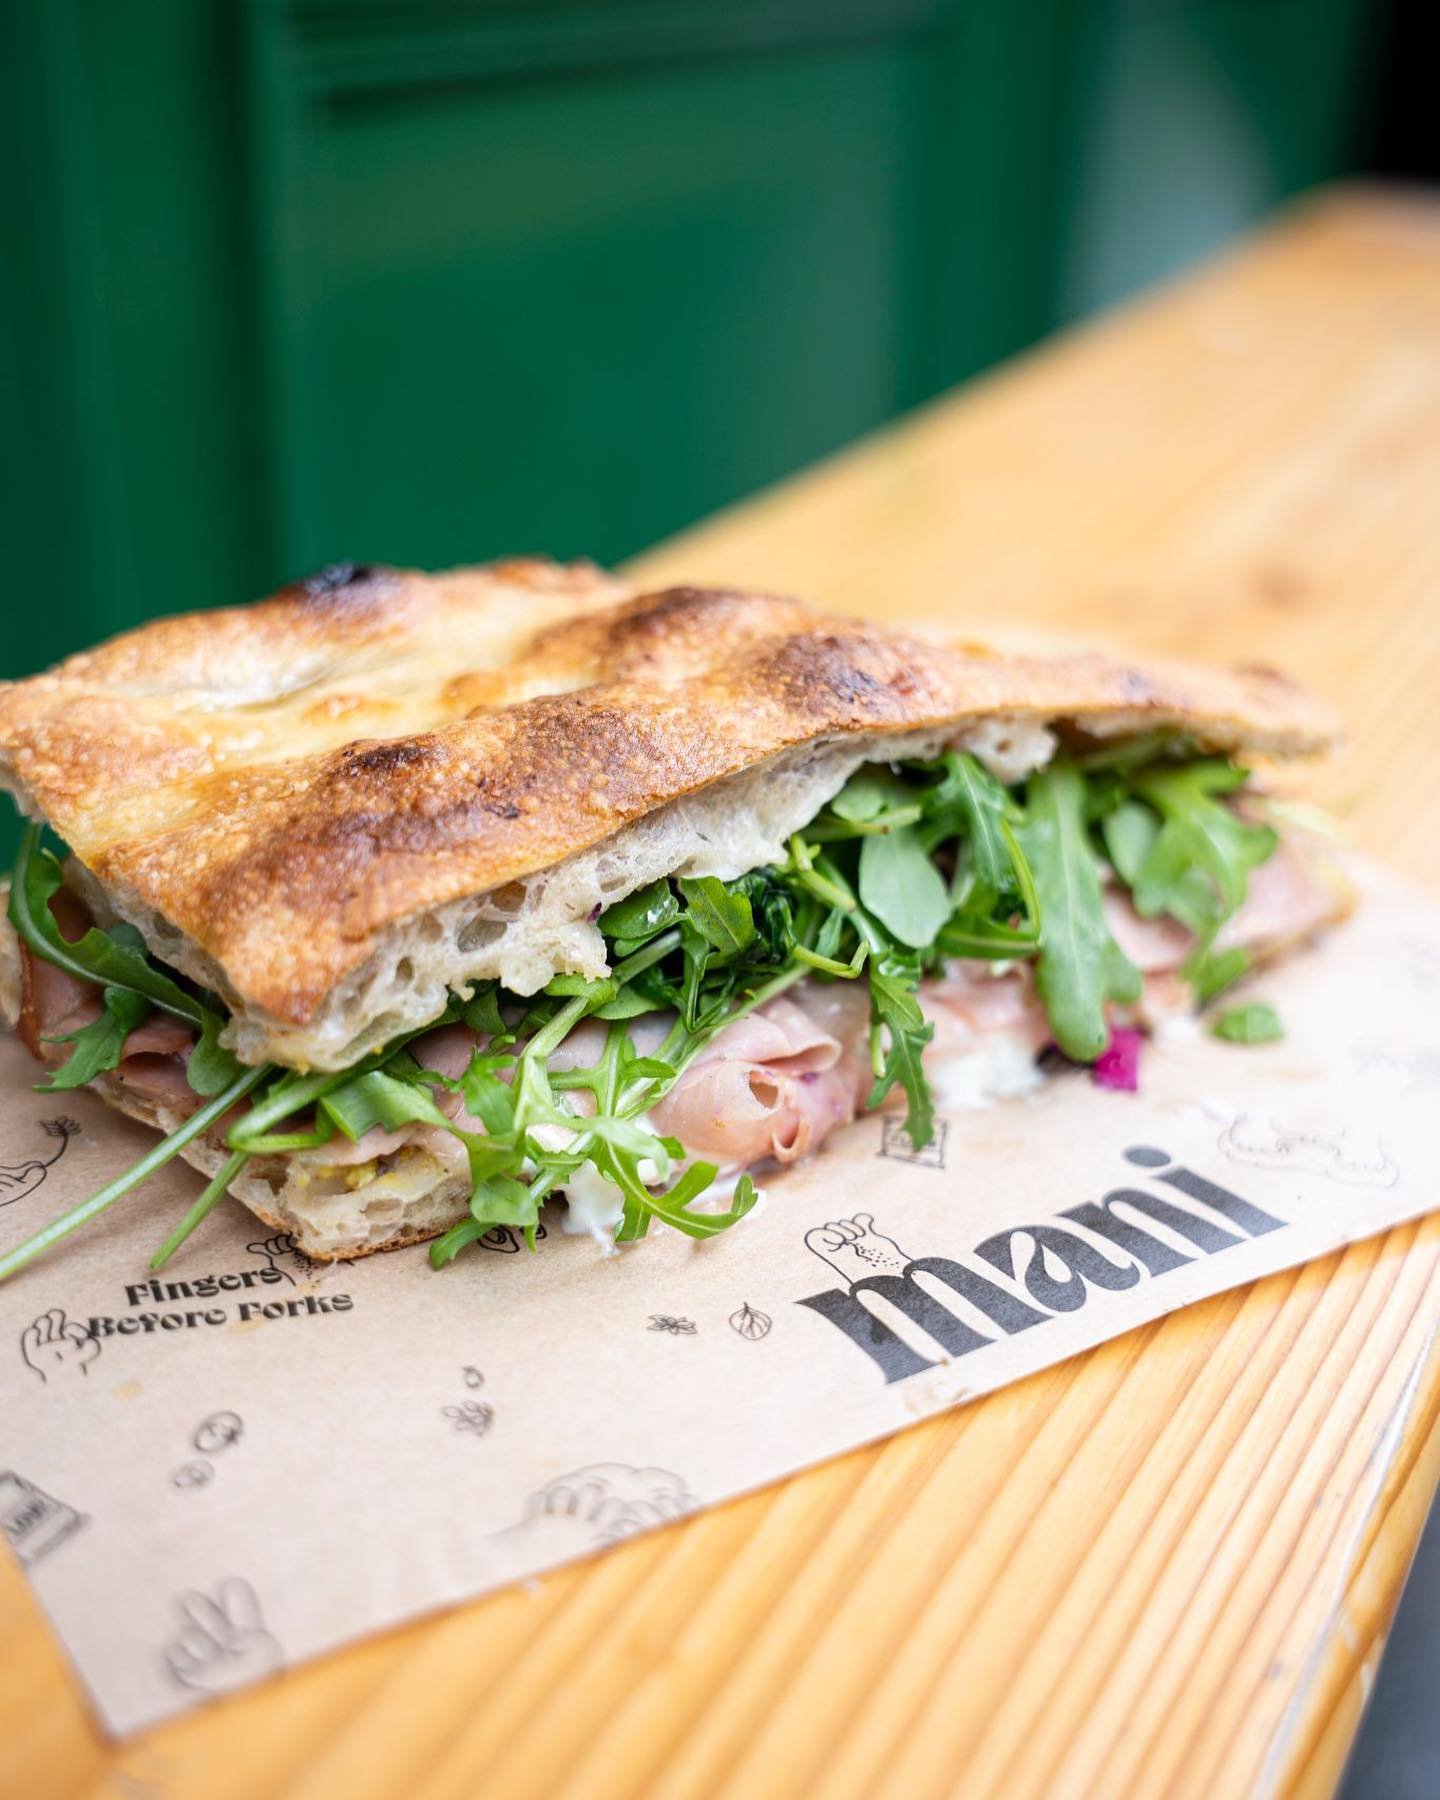 Our Tuscan take on a good Sambo. 🥪 #TuscanPanini

#FingersBeforeForks #RomanPizza #PizzaATaglio #DublinRestaurants #DublinPizza #PizzaByTheSlice